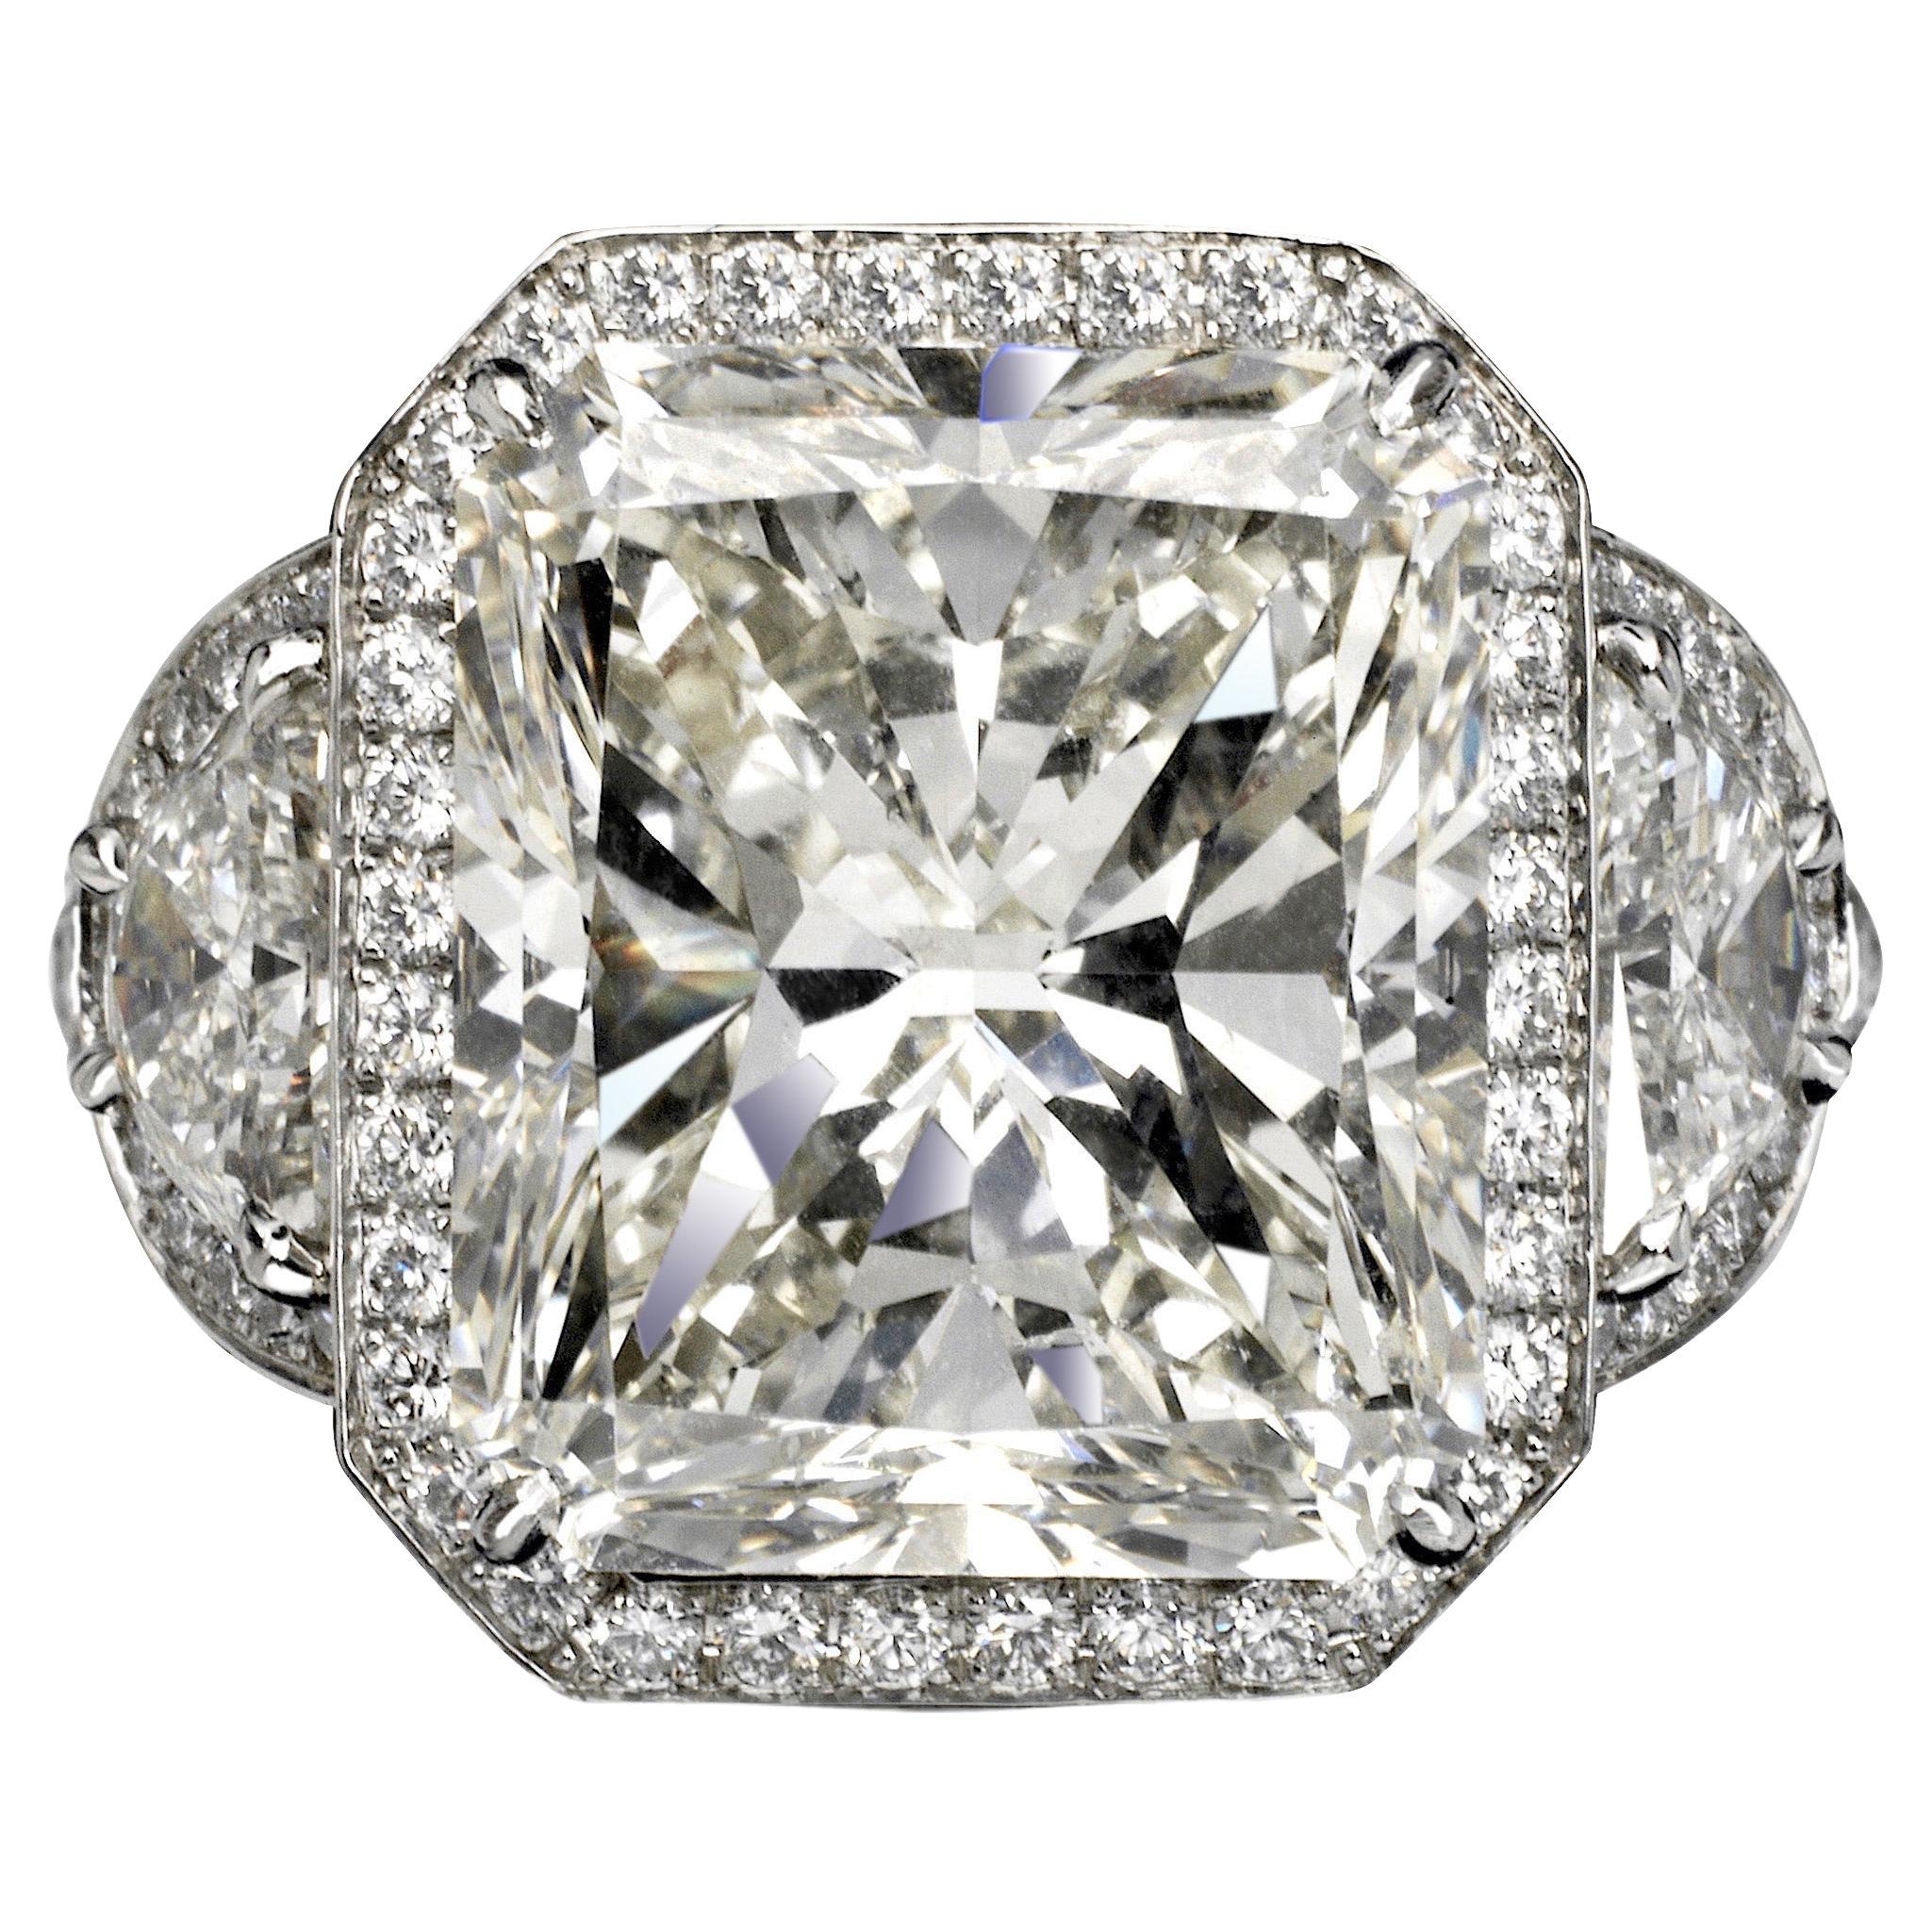 11 Carat Radiant Cut Diamond Engagement Ring Certified H VS1